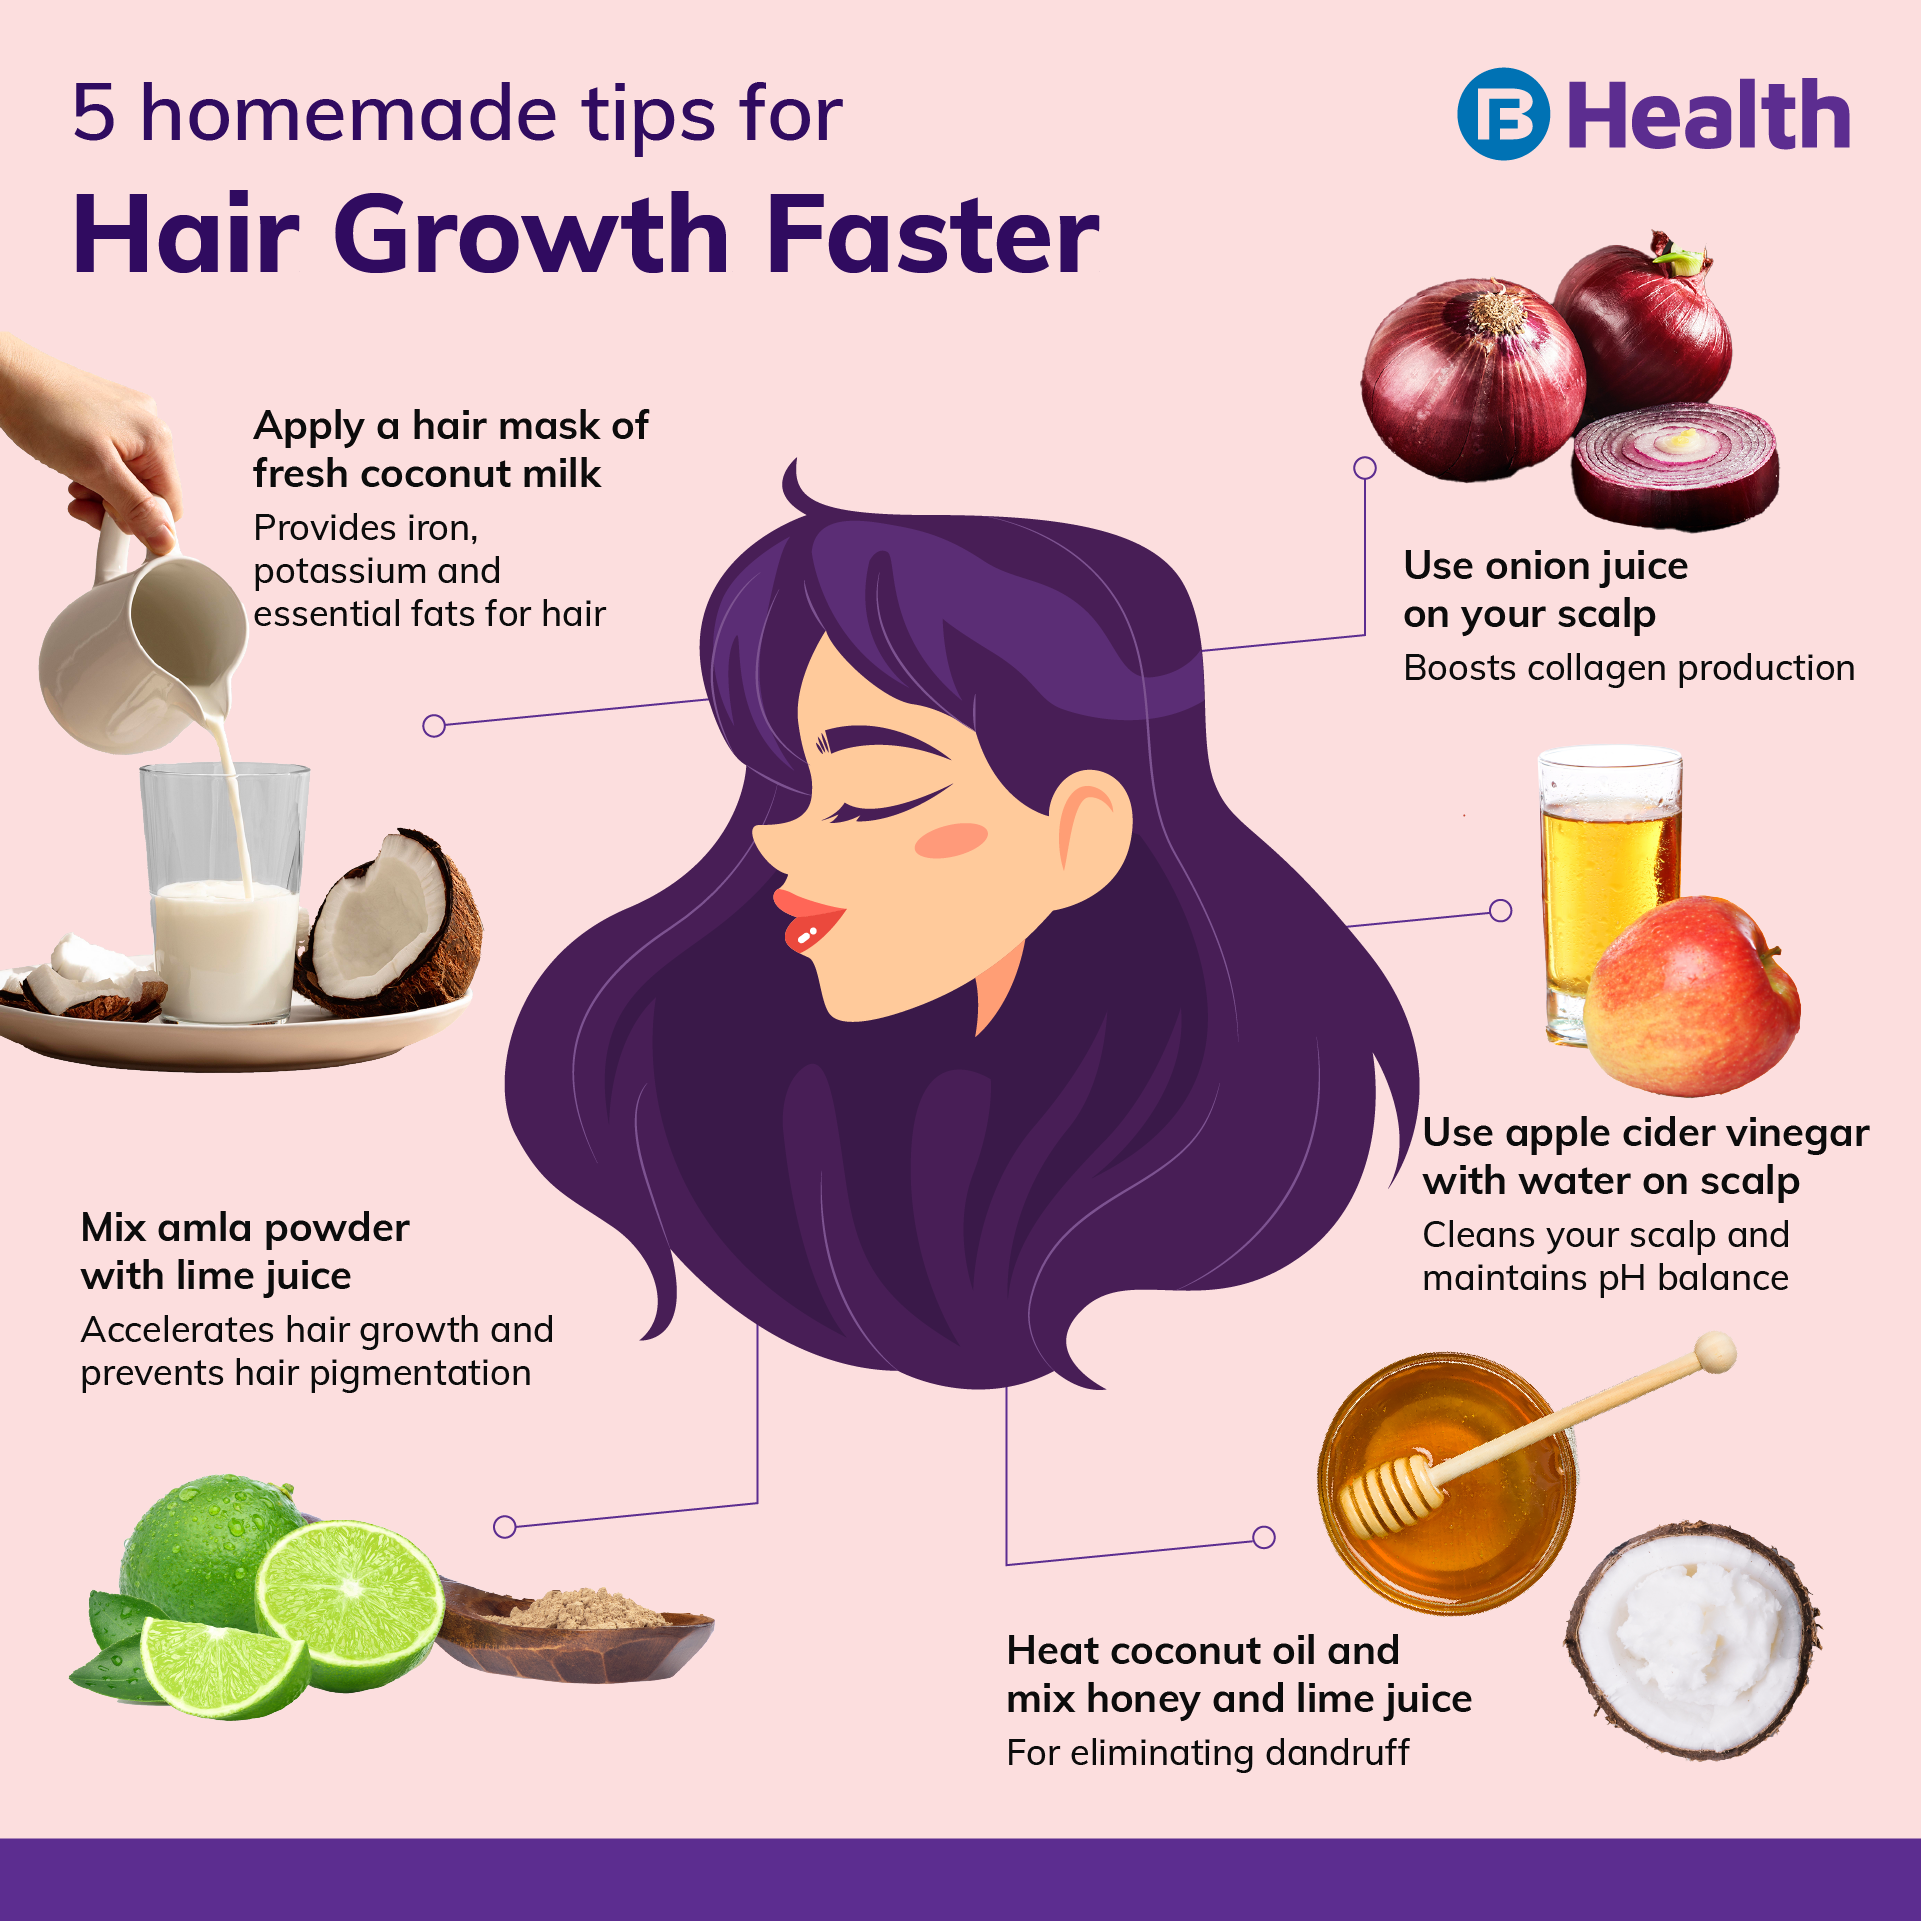 hair growth home tips